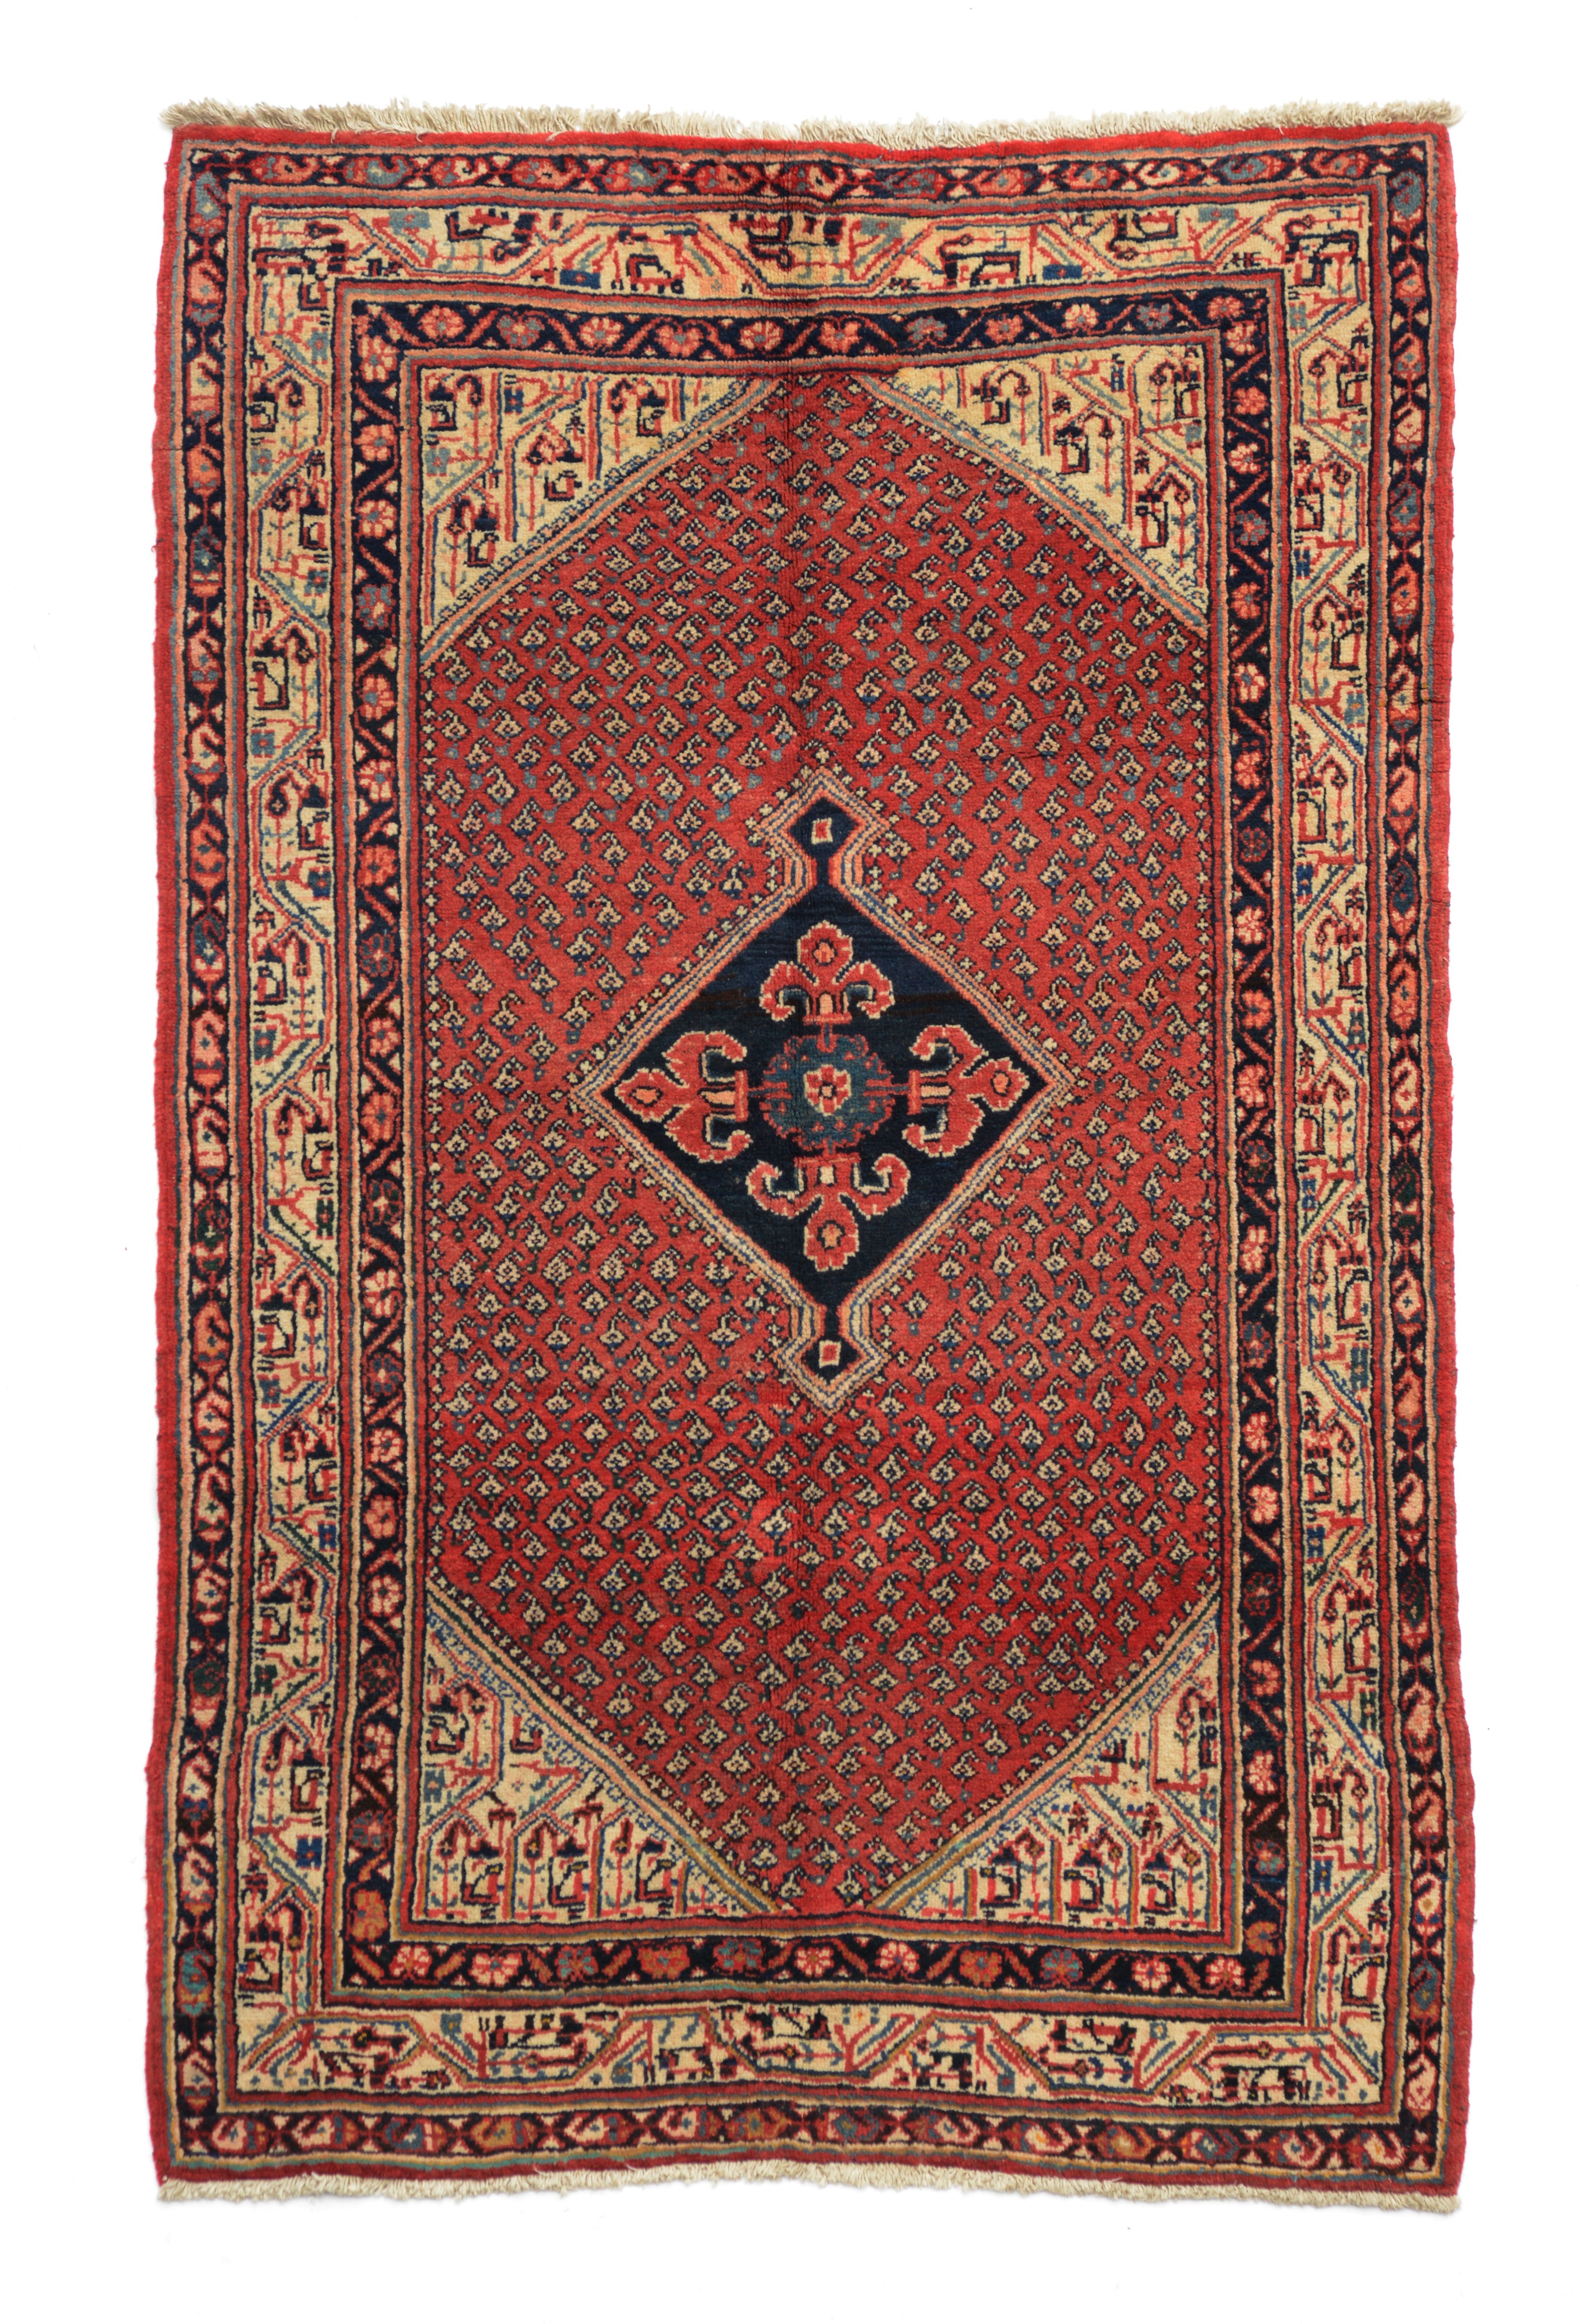 A Seraband rug, Iran